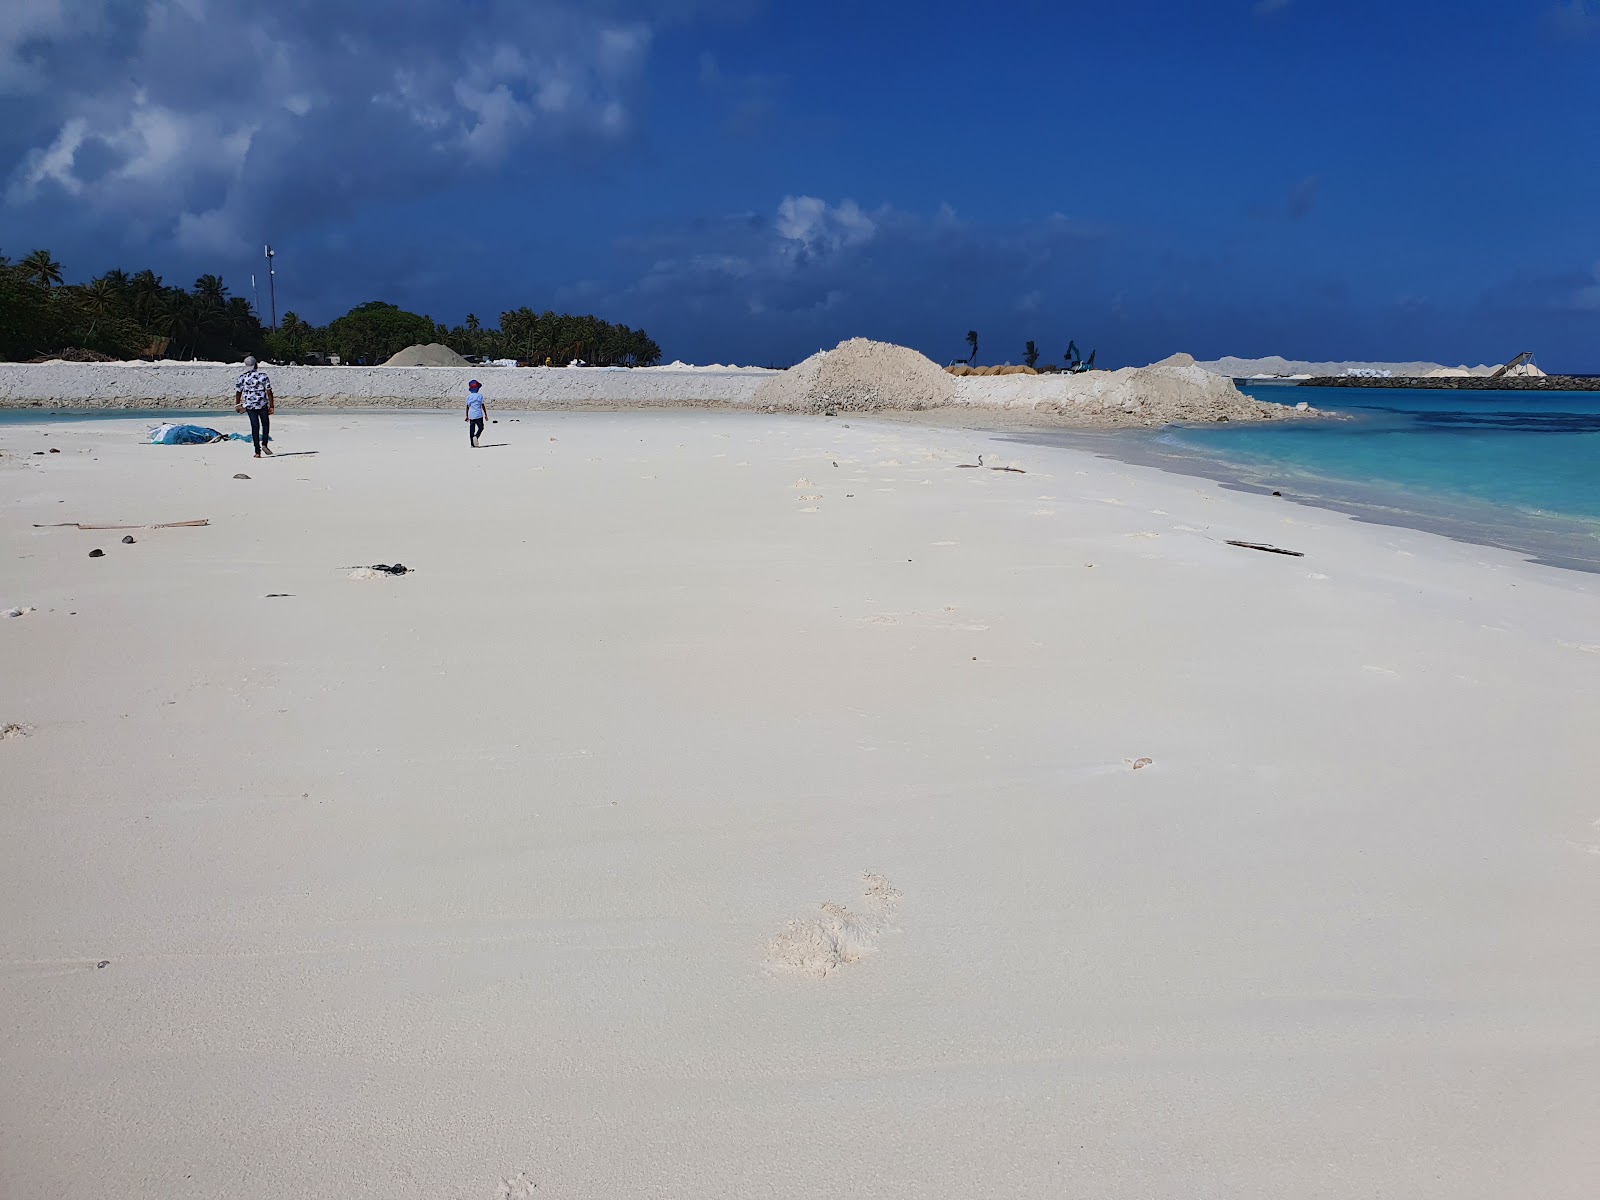 Fotografie cu Fulhadhoo Thundi Beach cu o suprafață de nisip alb